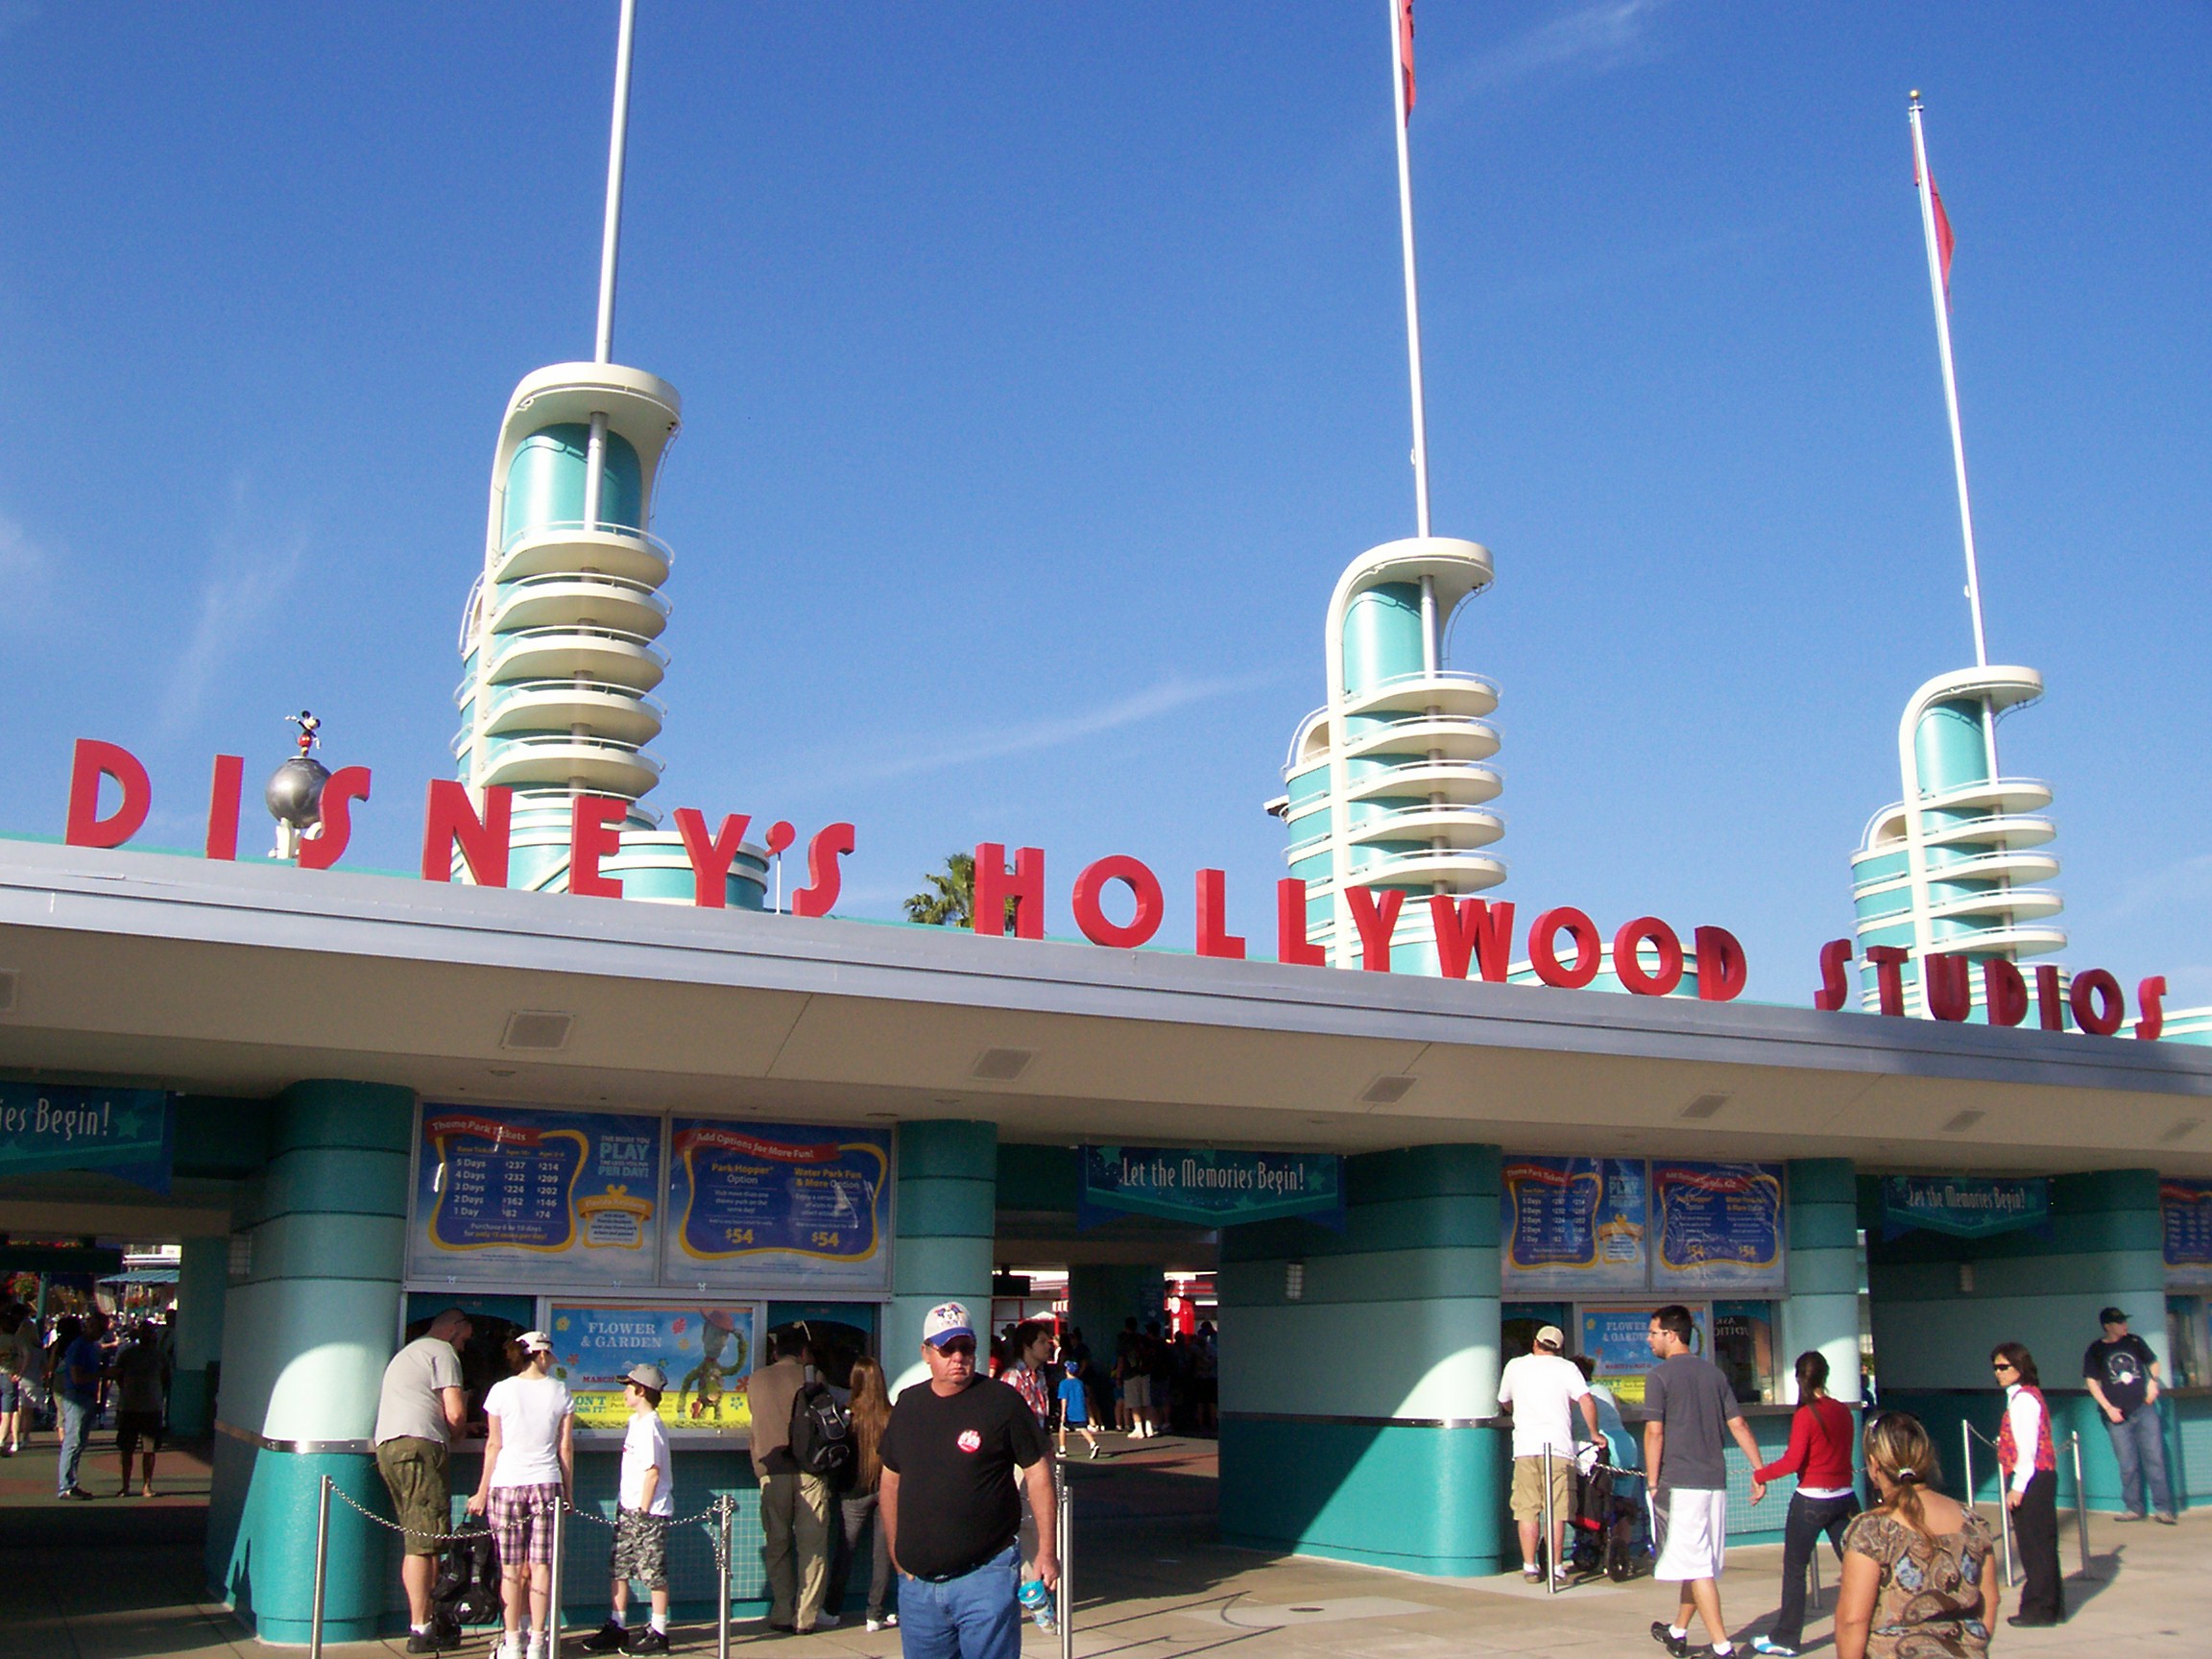 Rock 'n' Roller Coaster - Disney's Hollywood Studios in Lake Buena Vista,  Florida - Kid-friendly Attractions